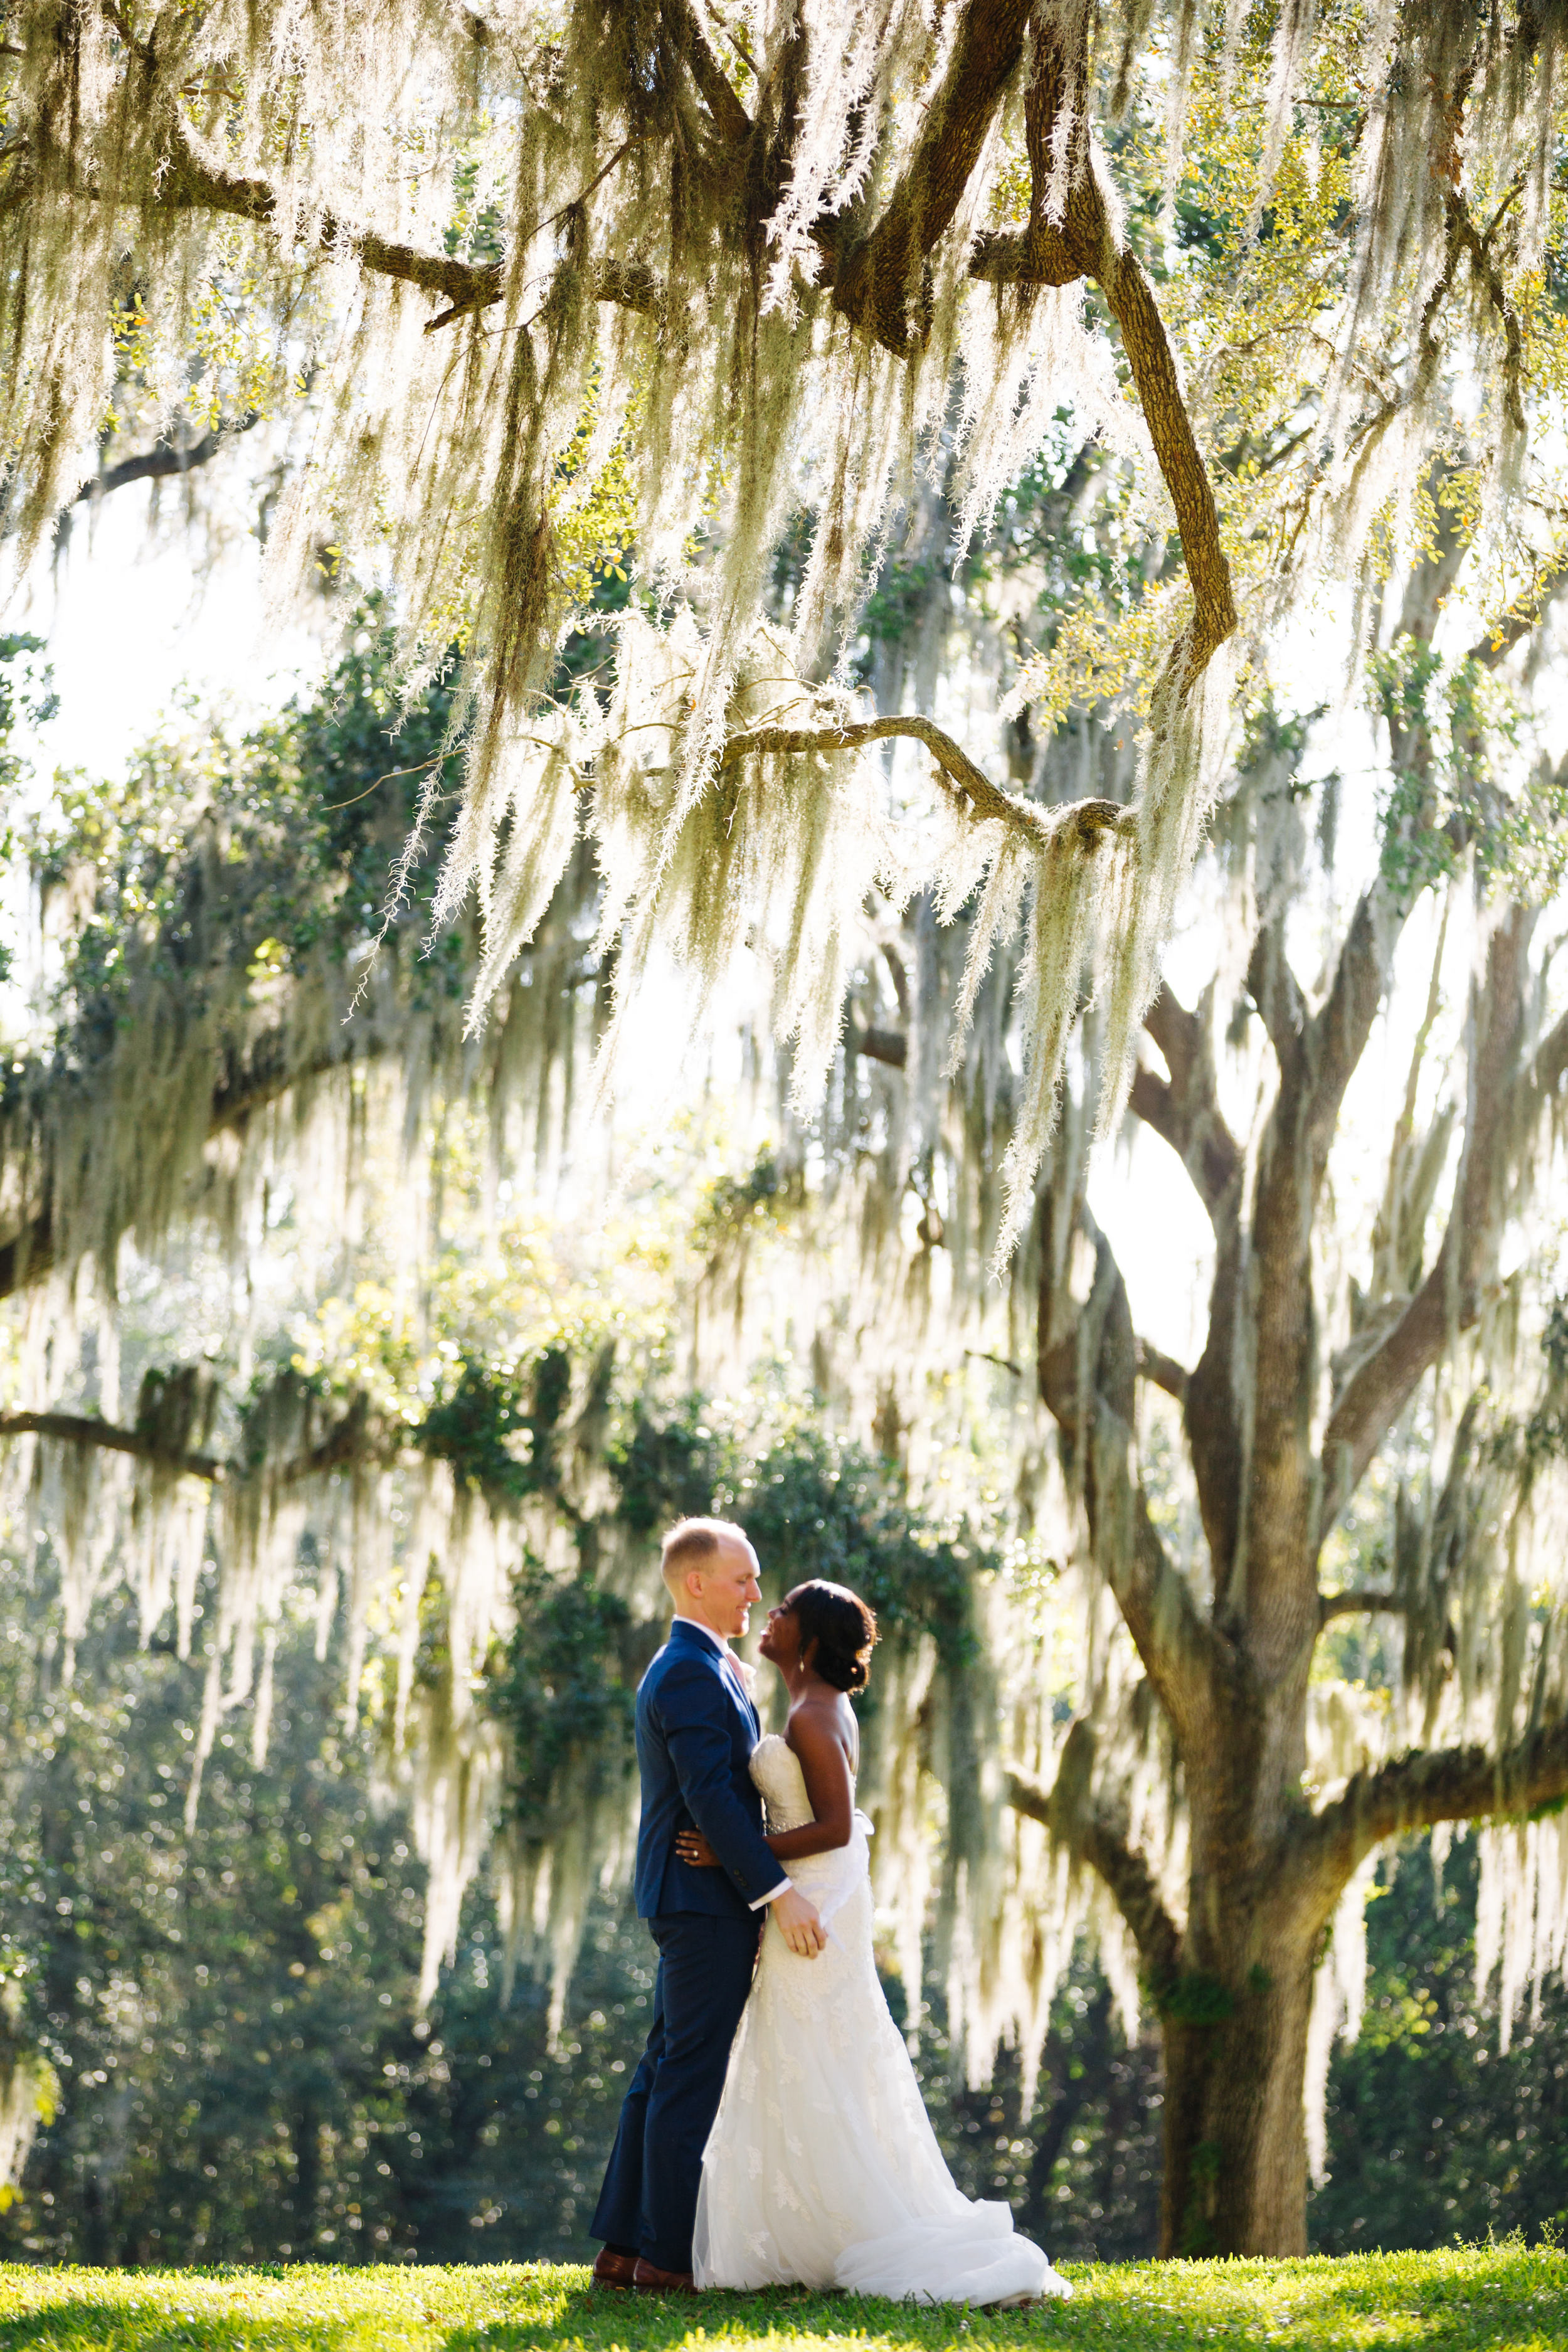 Daniel Chelsea Bok Tower Gardens Wedding Lake Wales Florida